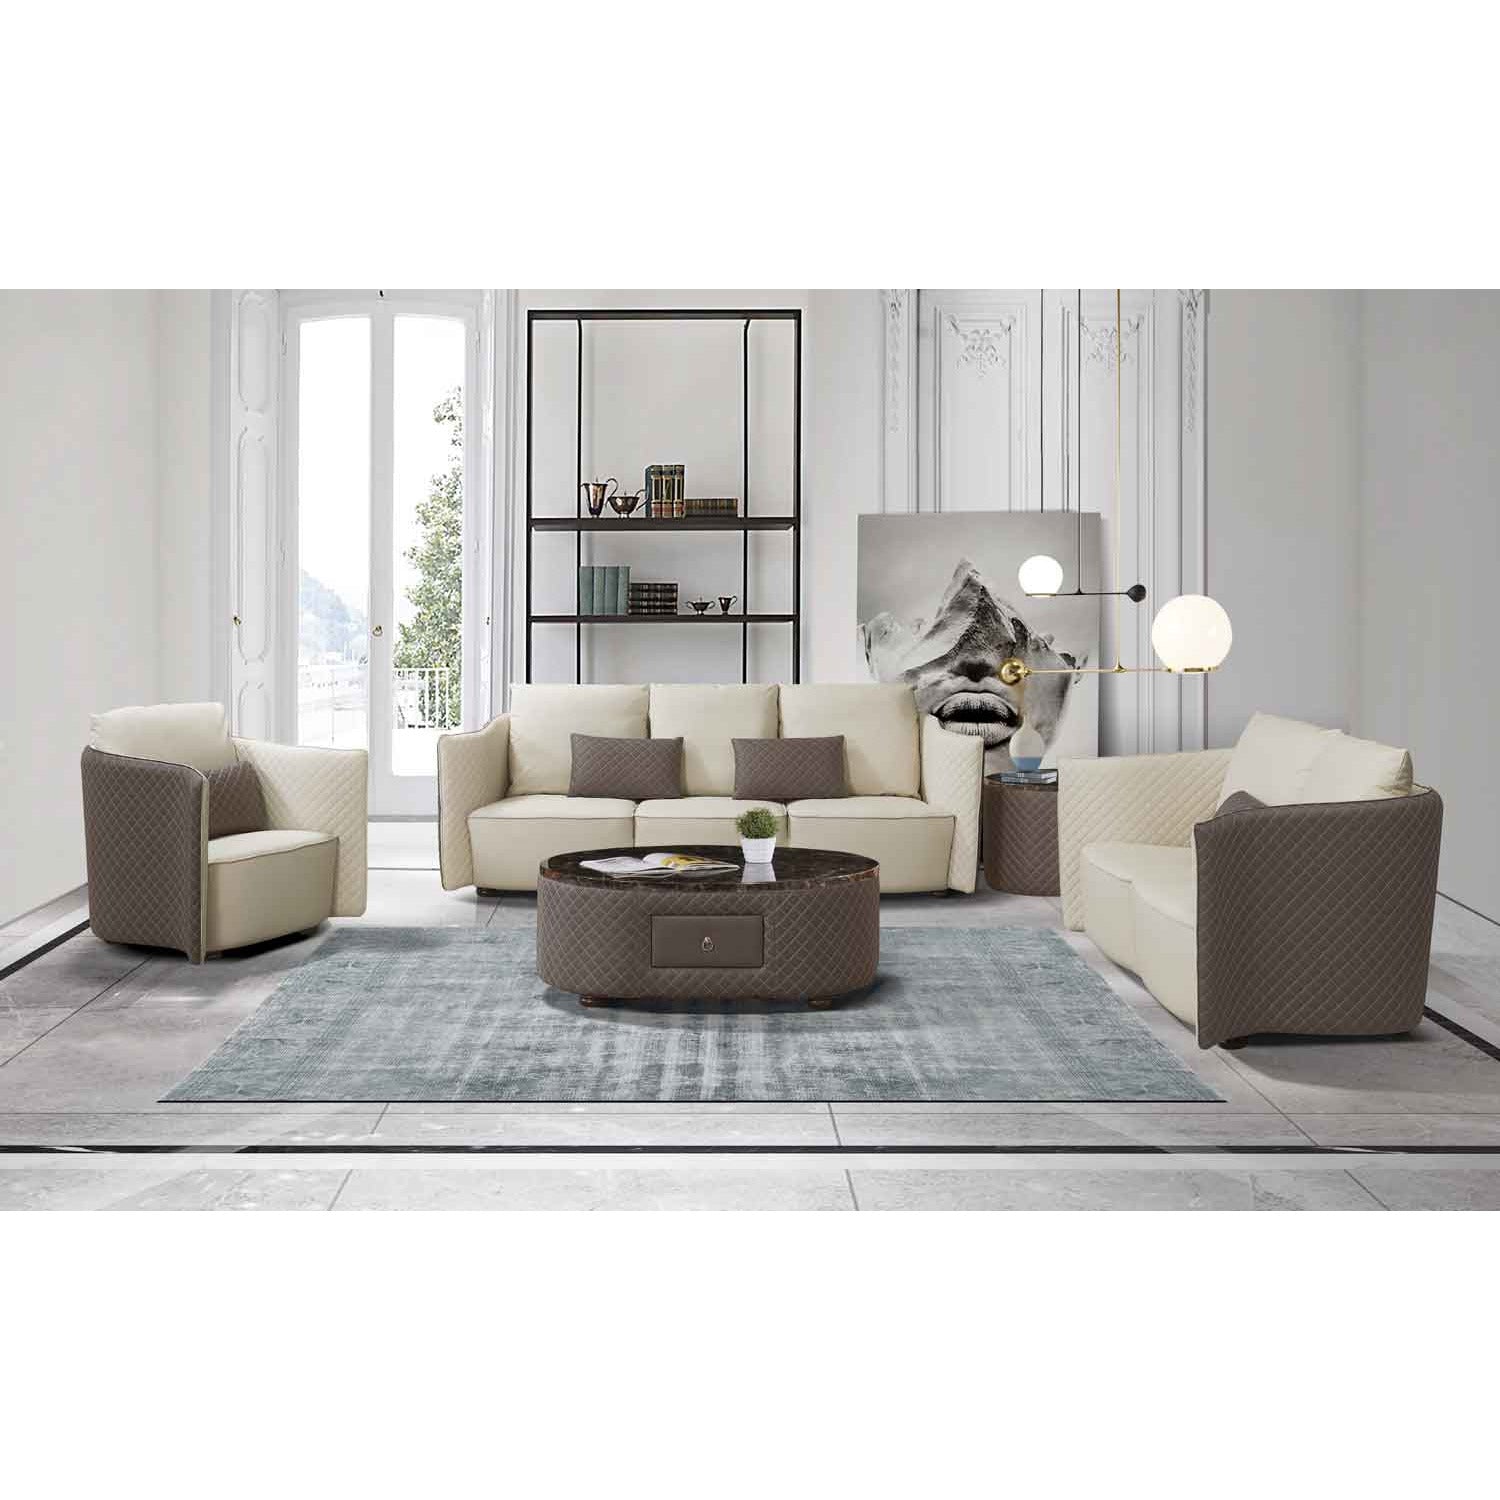 European Furniture - Makassar Sofa in Grey & Taupe - 52550-S - New Star Living